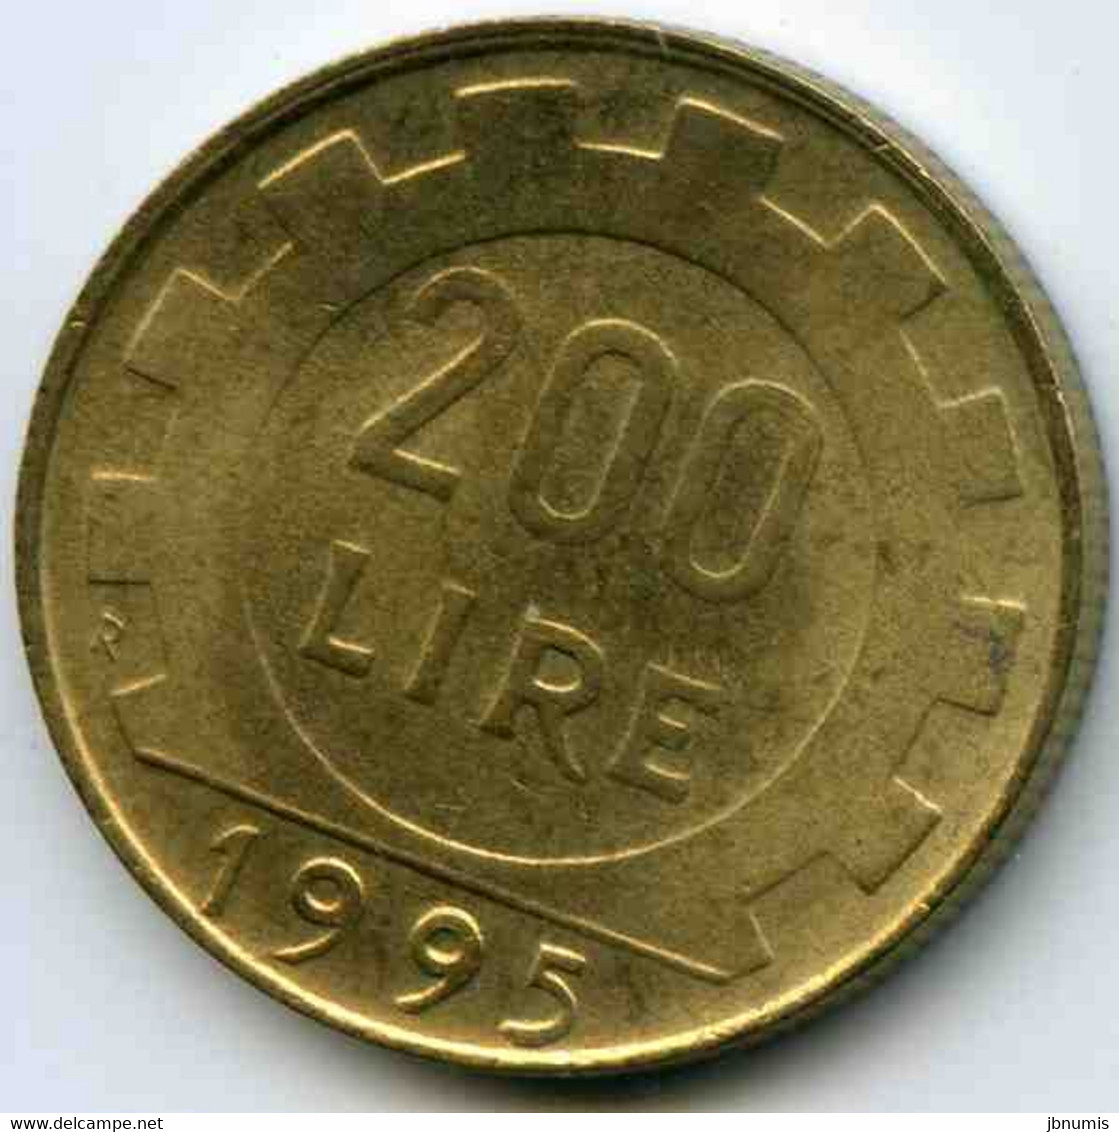 Italie Italia 200 Lire 1995 KM 105 - 200 Liras